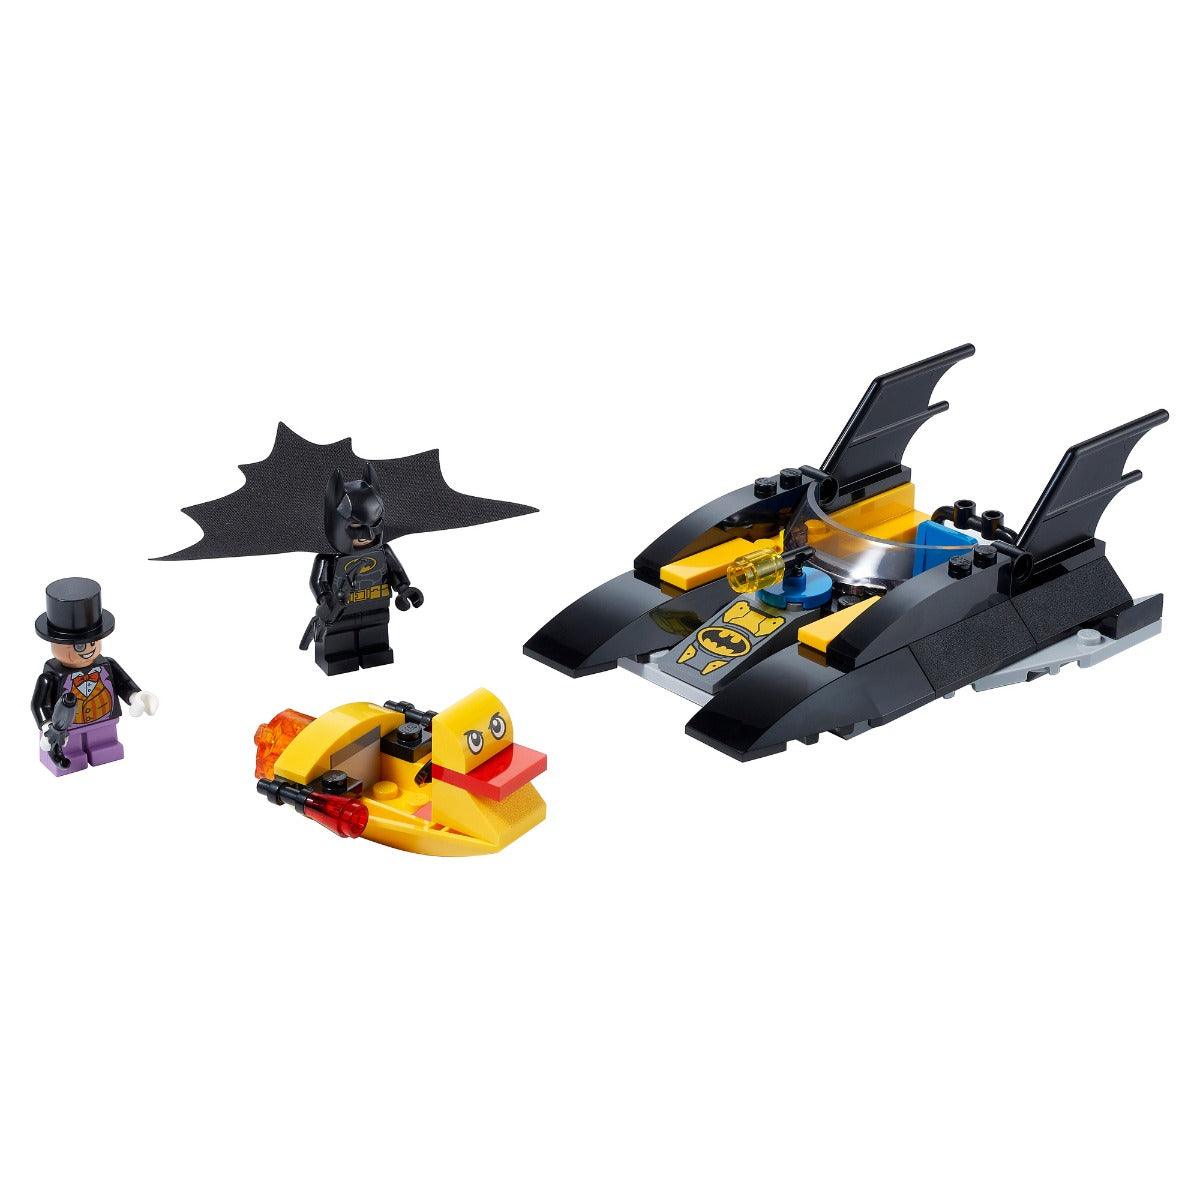 LEGO Super Heroes DC Batman Batboat The Penguin Pursuit!